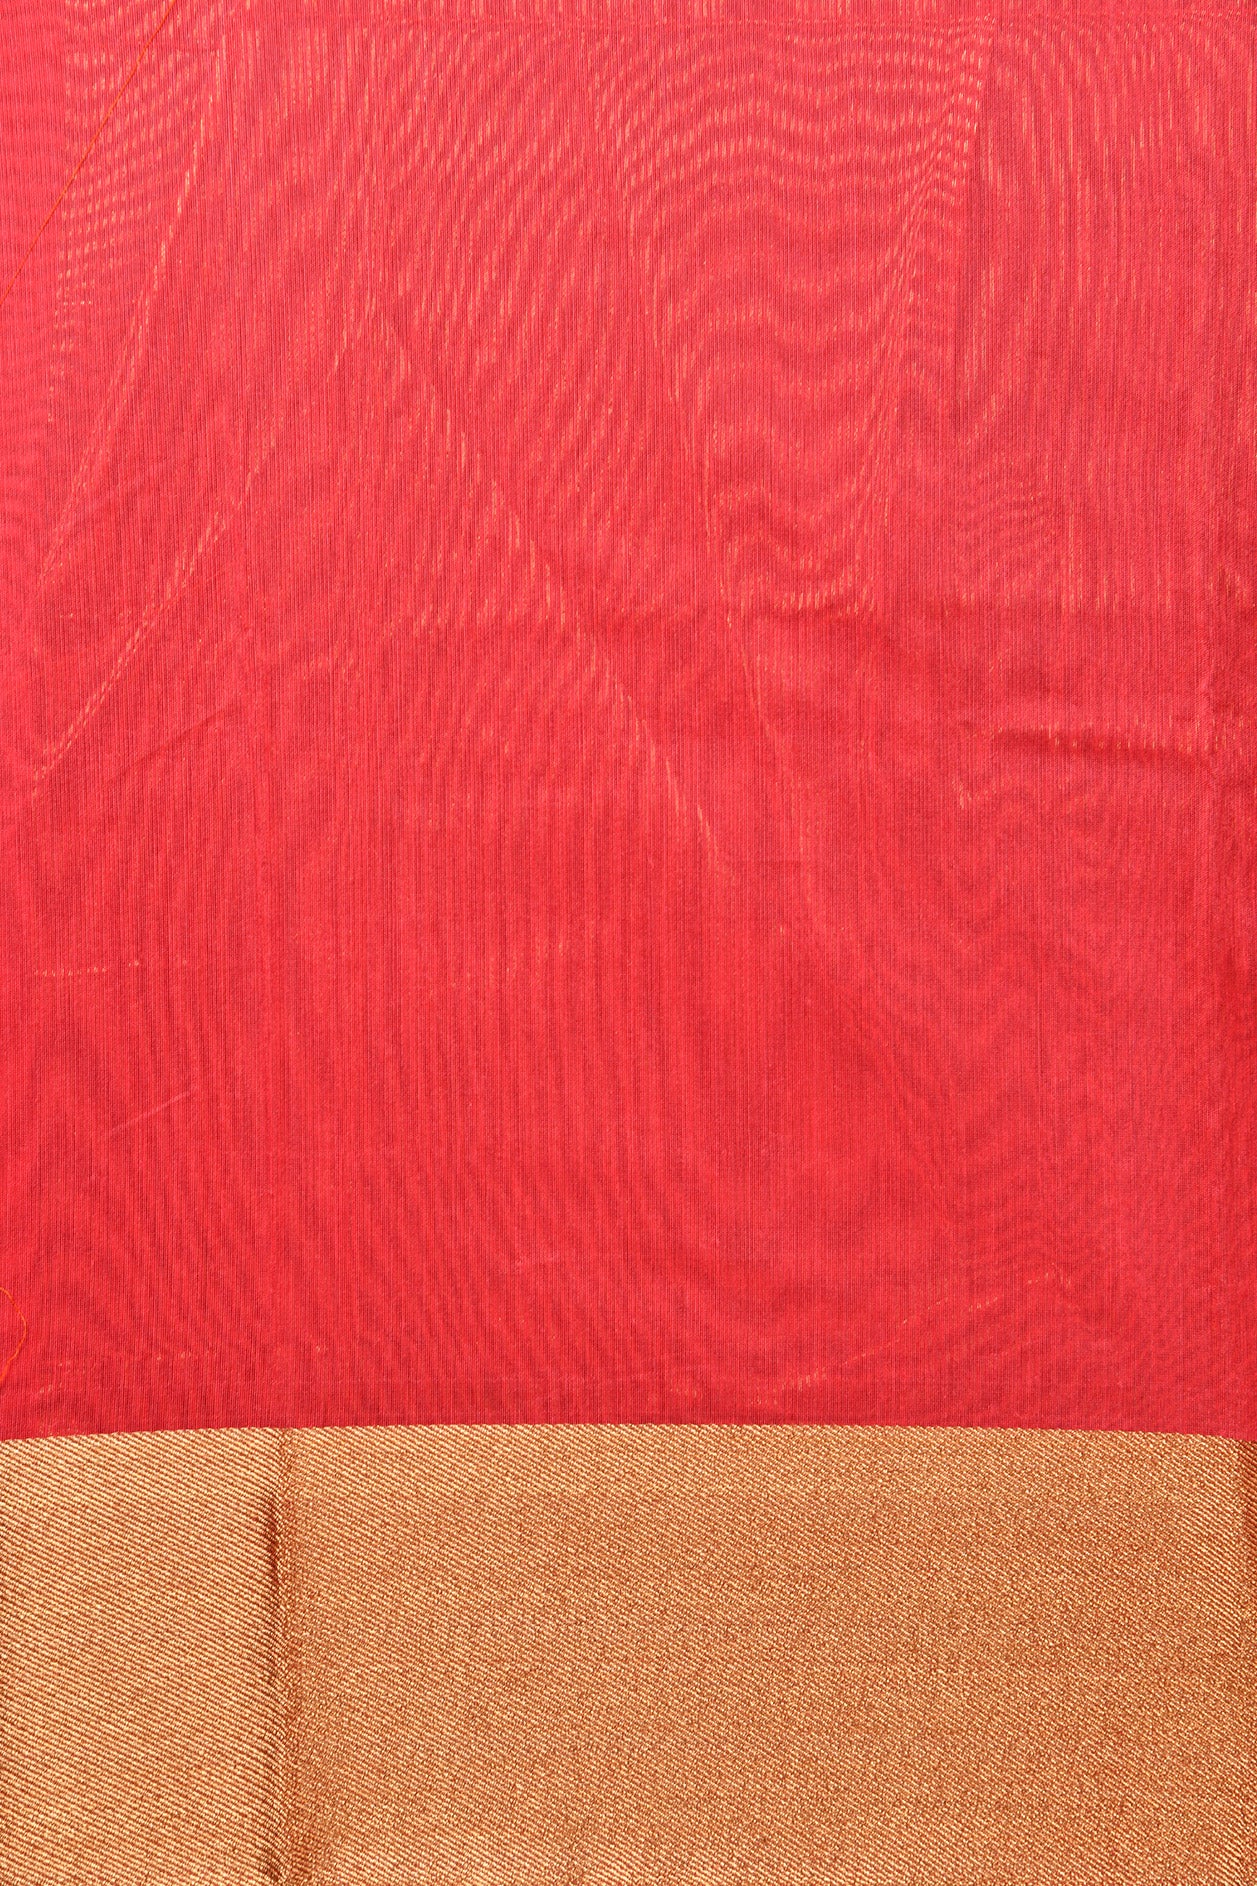 Checked Red Kora Silk Cotton Saree